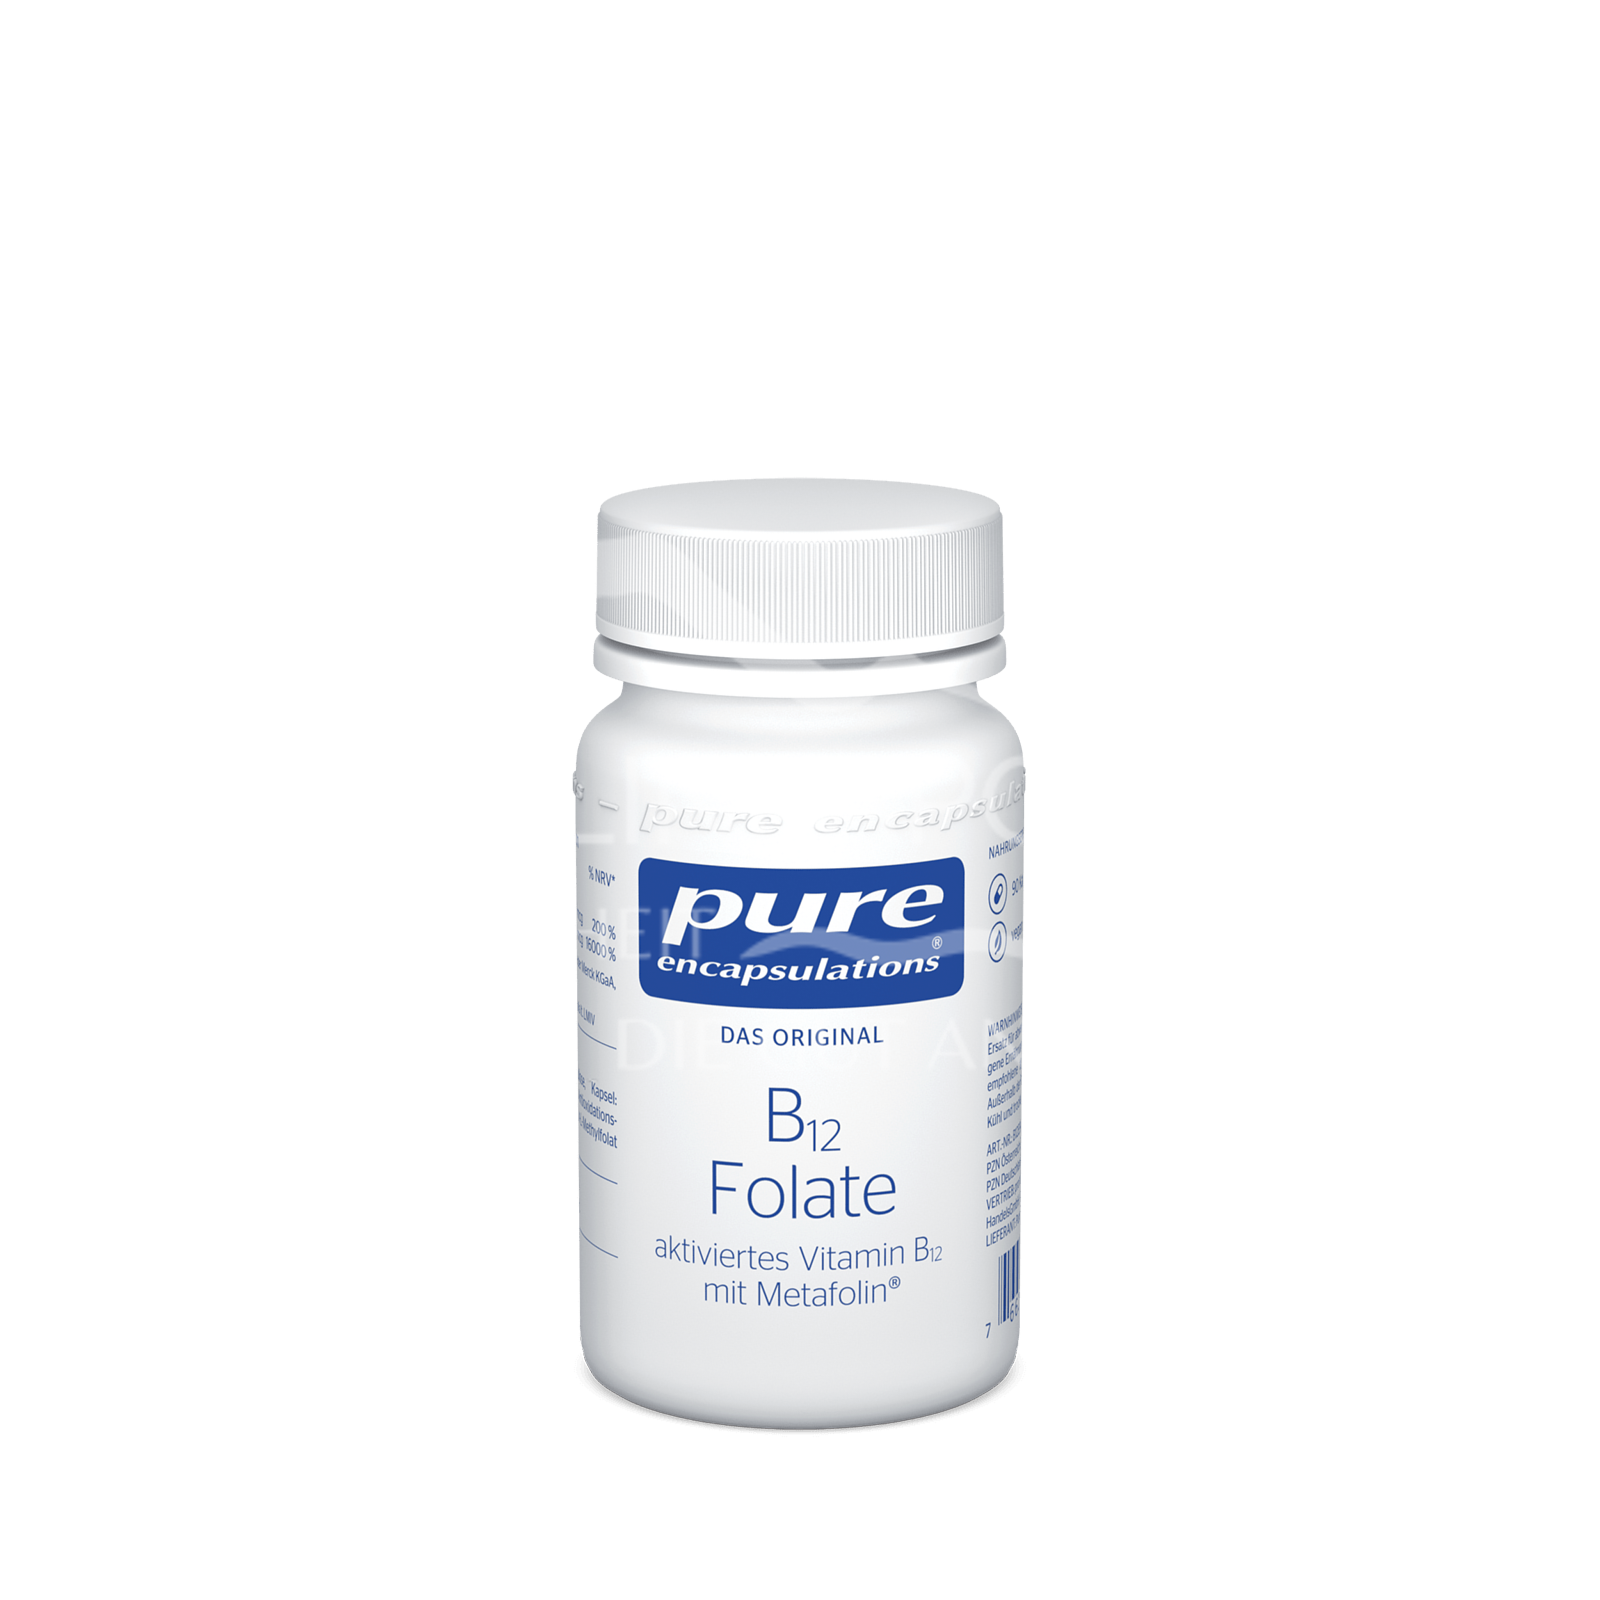 pure encapsulations® B12 Folate